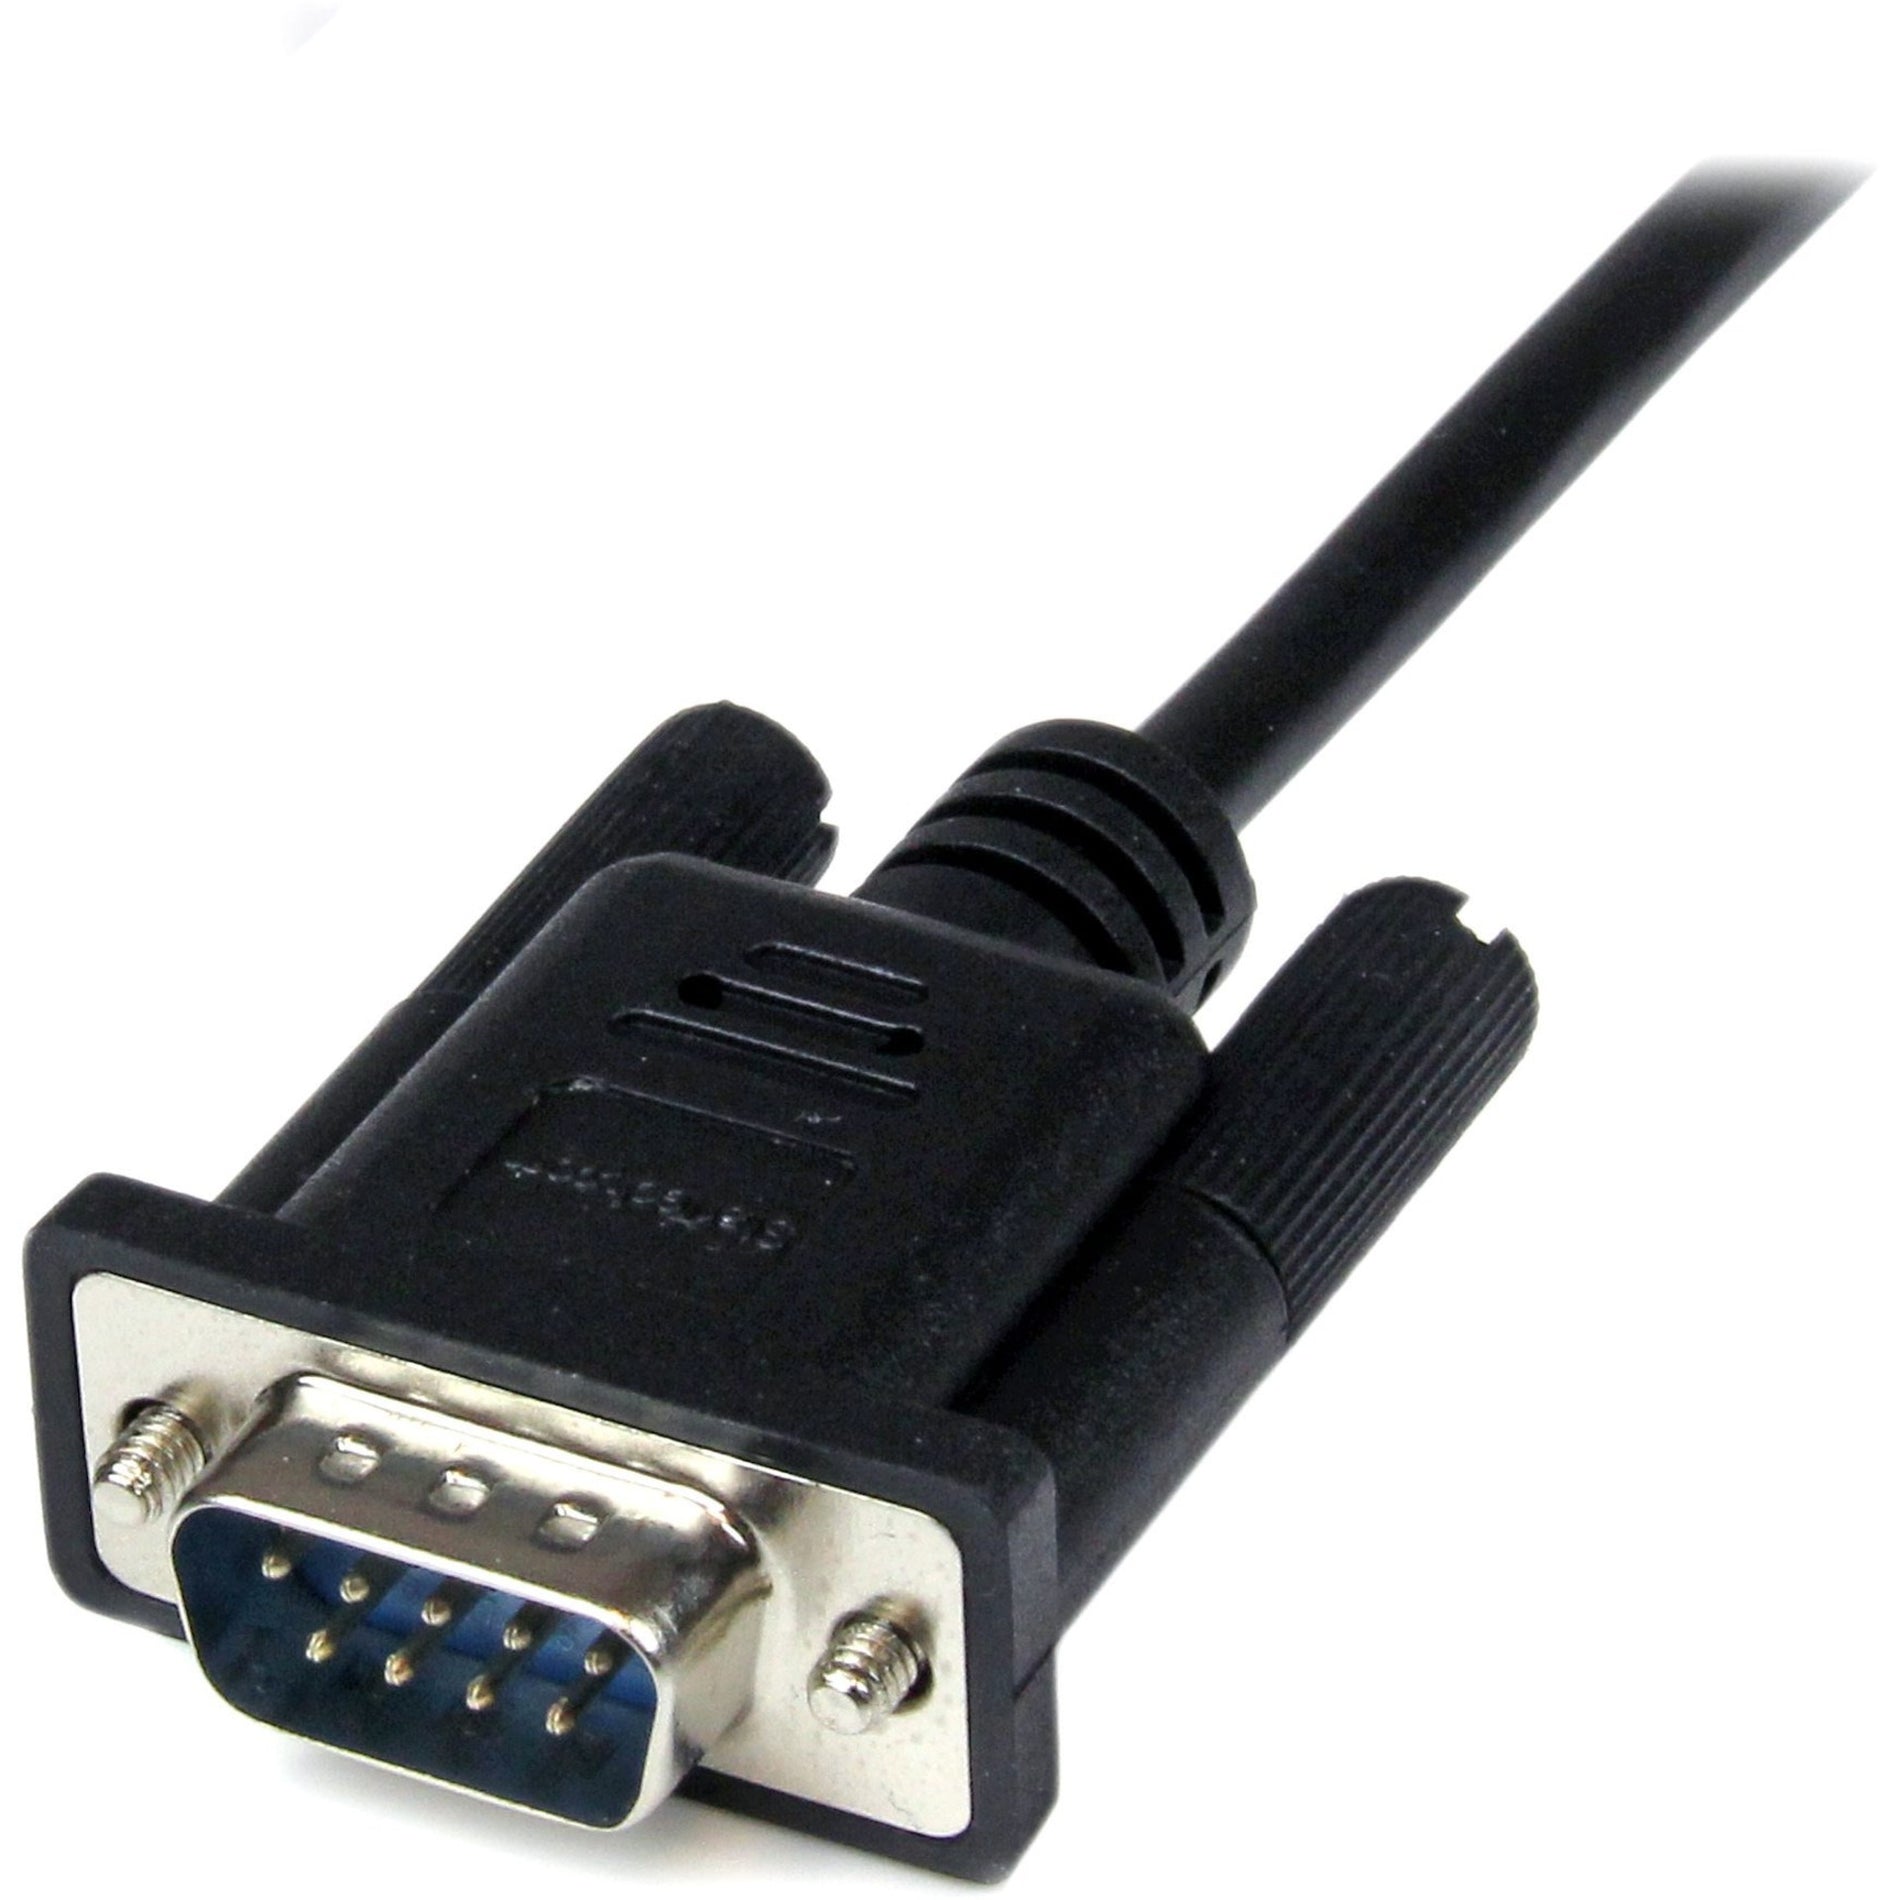 StarTech.com SCNM9FM1MBK 1m Black DB9 RS232 Serial Null Modem Cable F/M, EMI Protection, Lifetime Warranty